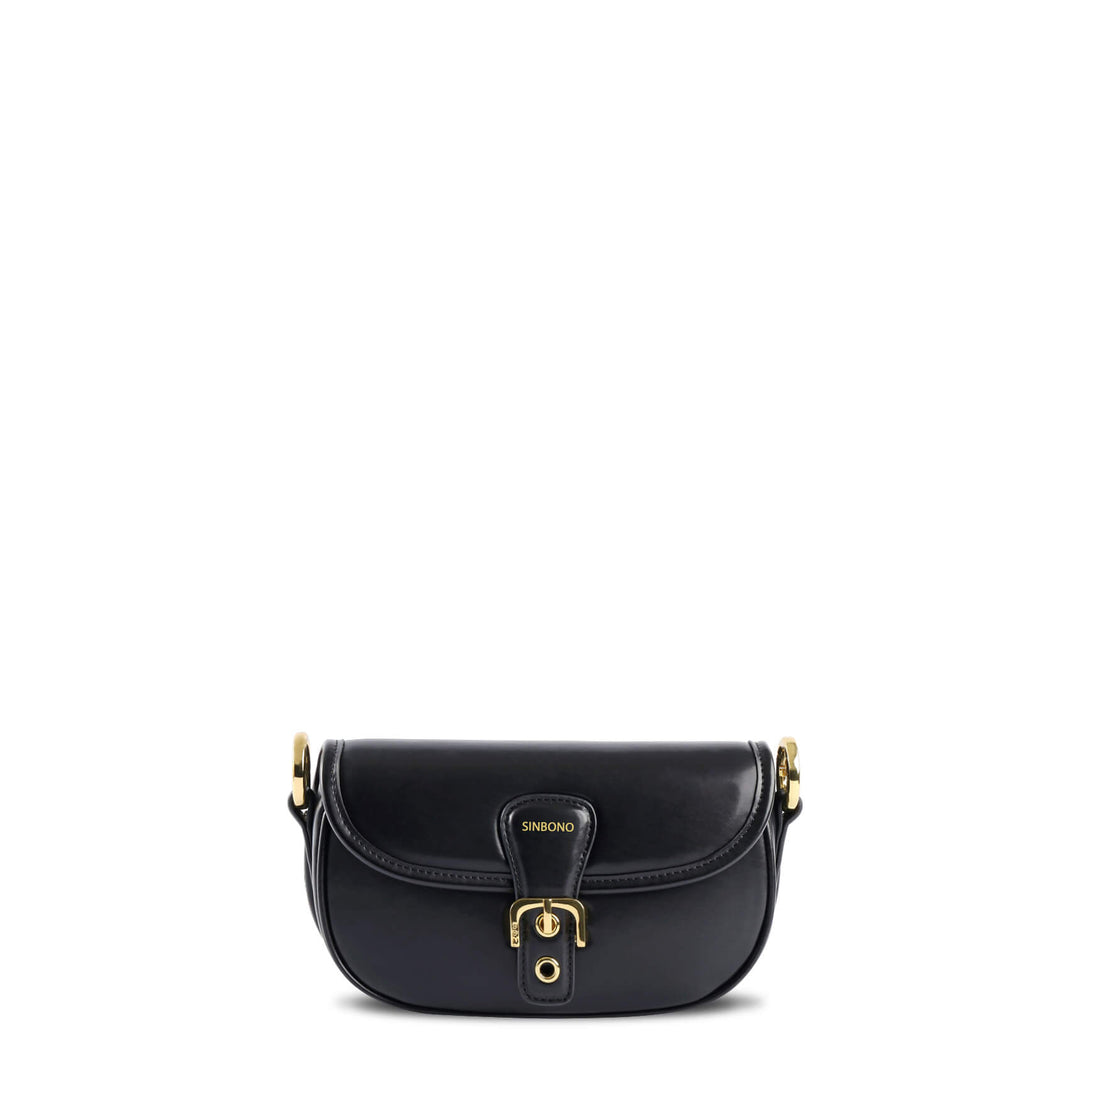 SINBONO Small Fiona Vegan Handbags Black